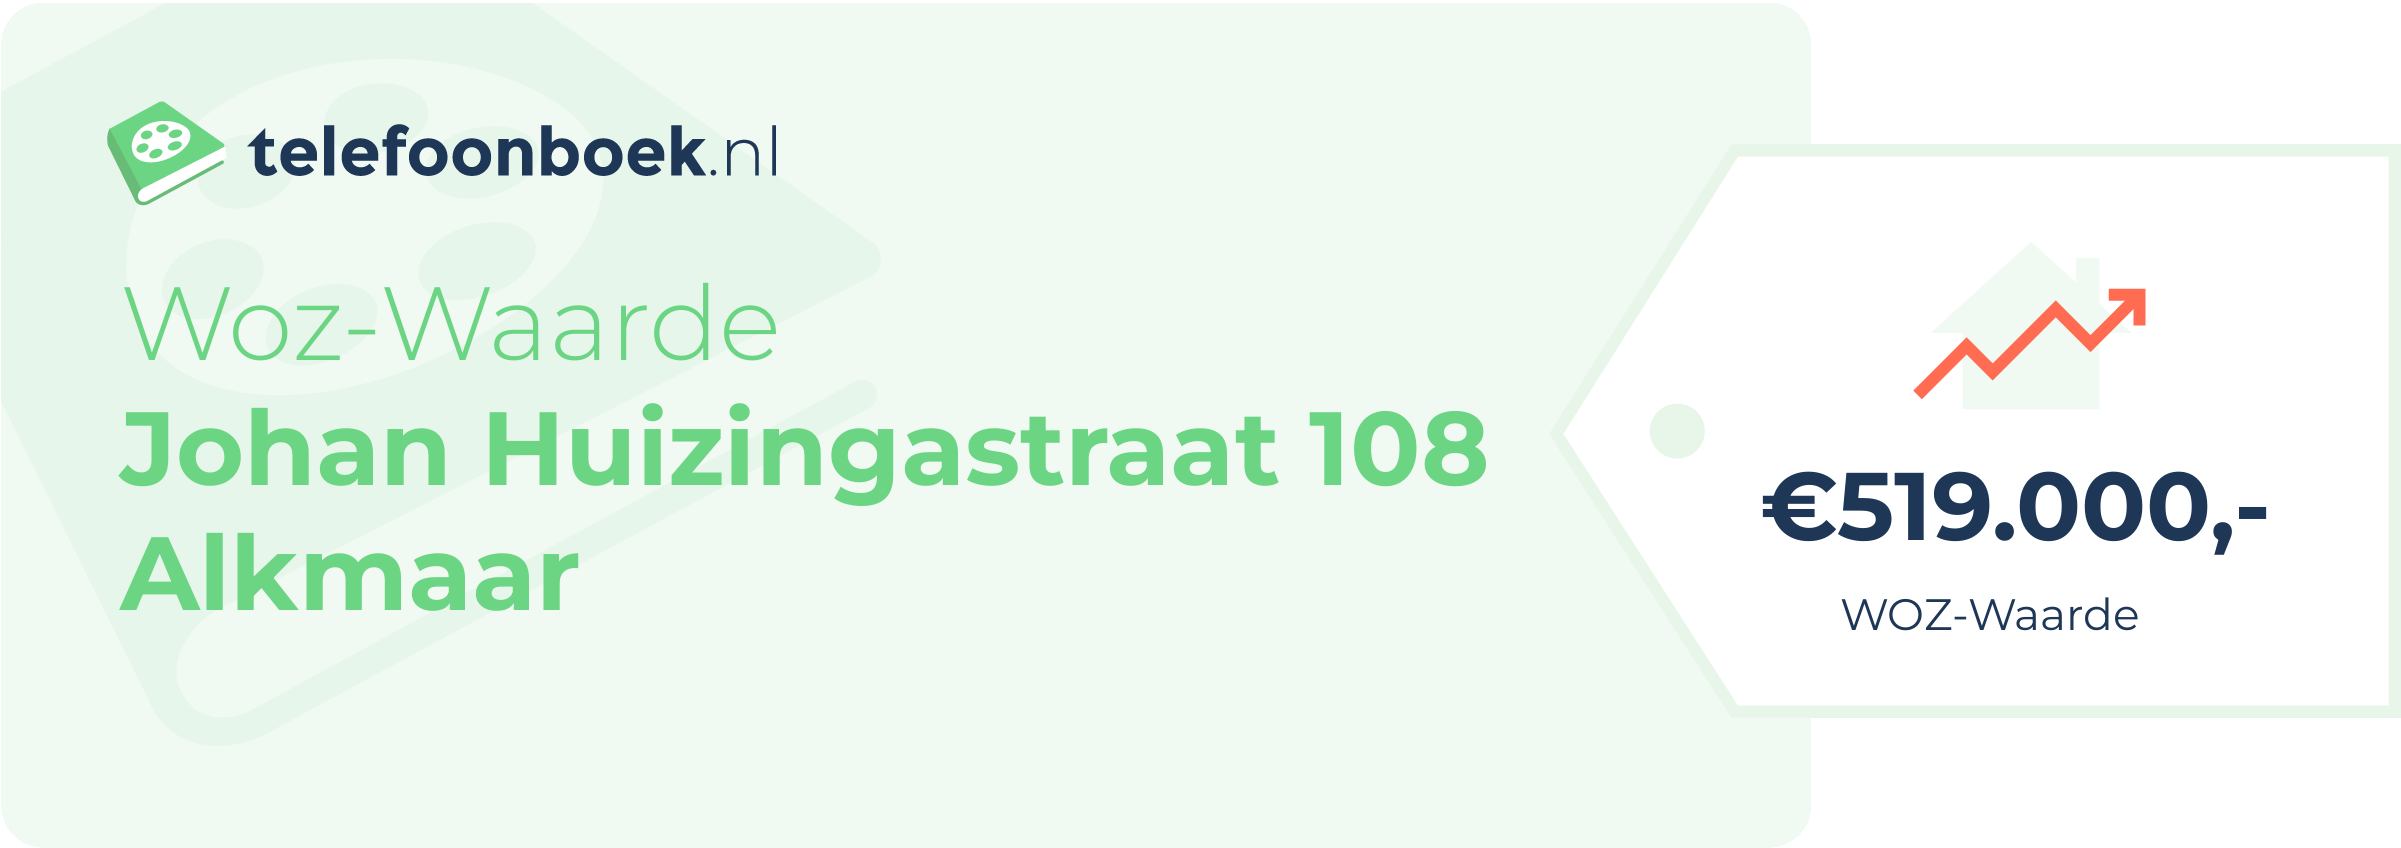 WOZ-waarde Johan Huizingastraat 108 Alkmaar